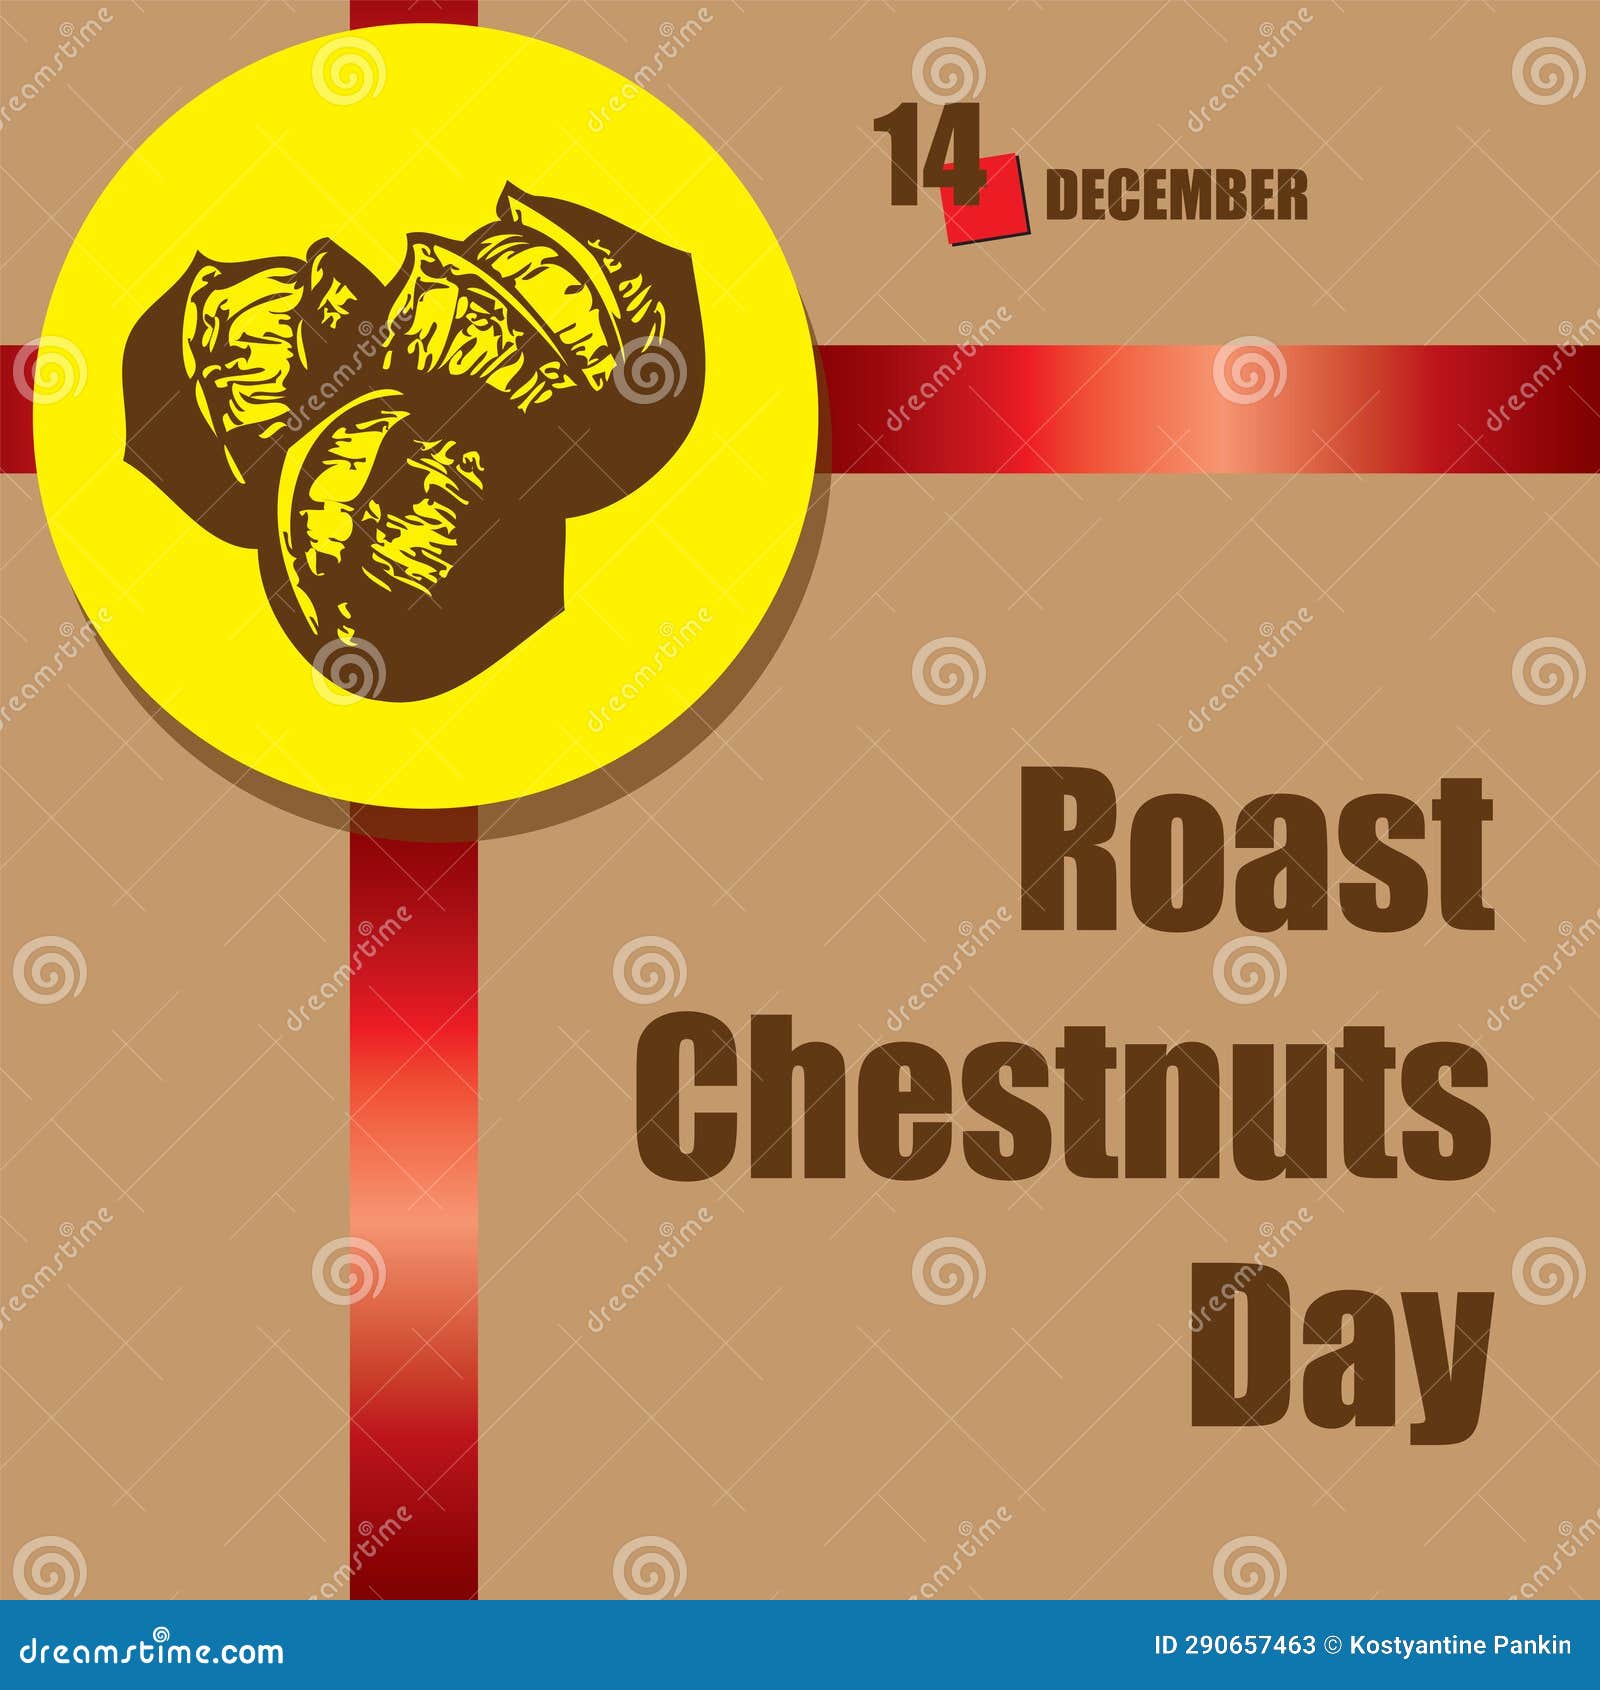 Roast Chestnuts Day stock illustration. Illustration of pattern - 290657463